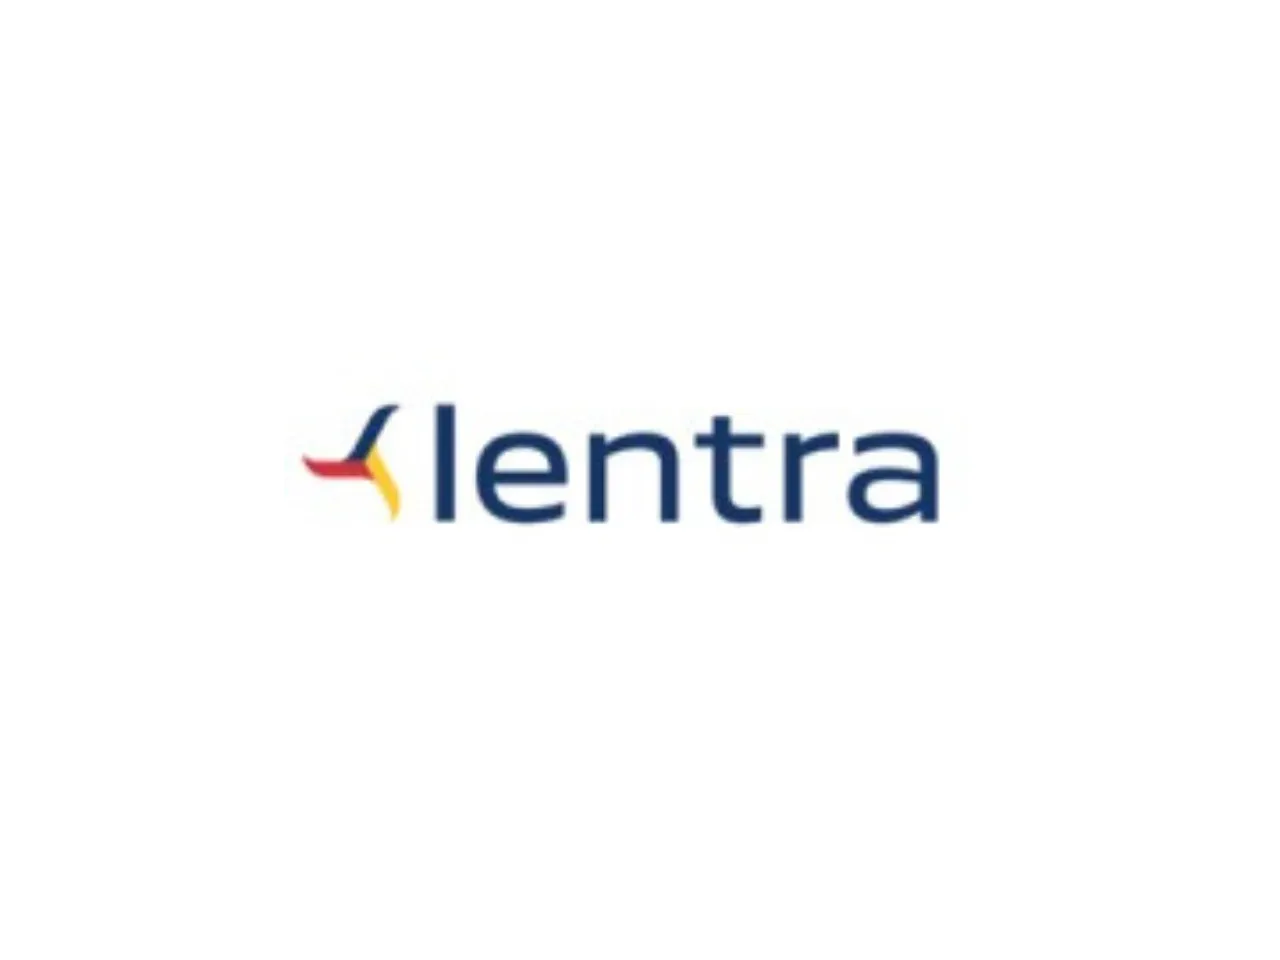 Lending startup Lentra raises $27M led by MUFG Bank, Dharana Capital